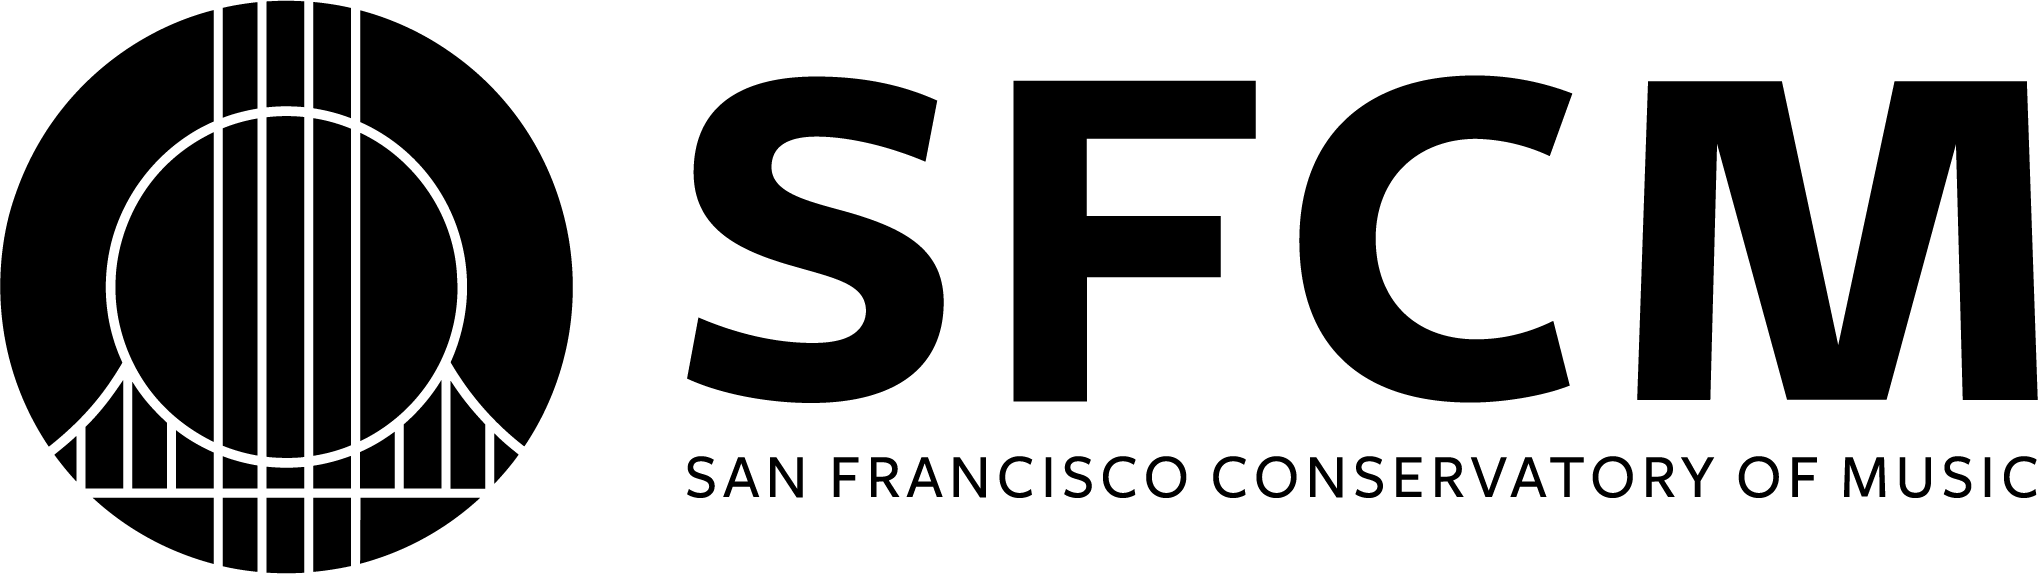 San Francisco Conservatory of Music logo